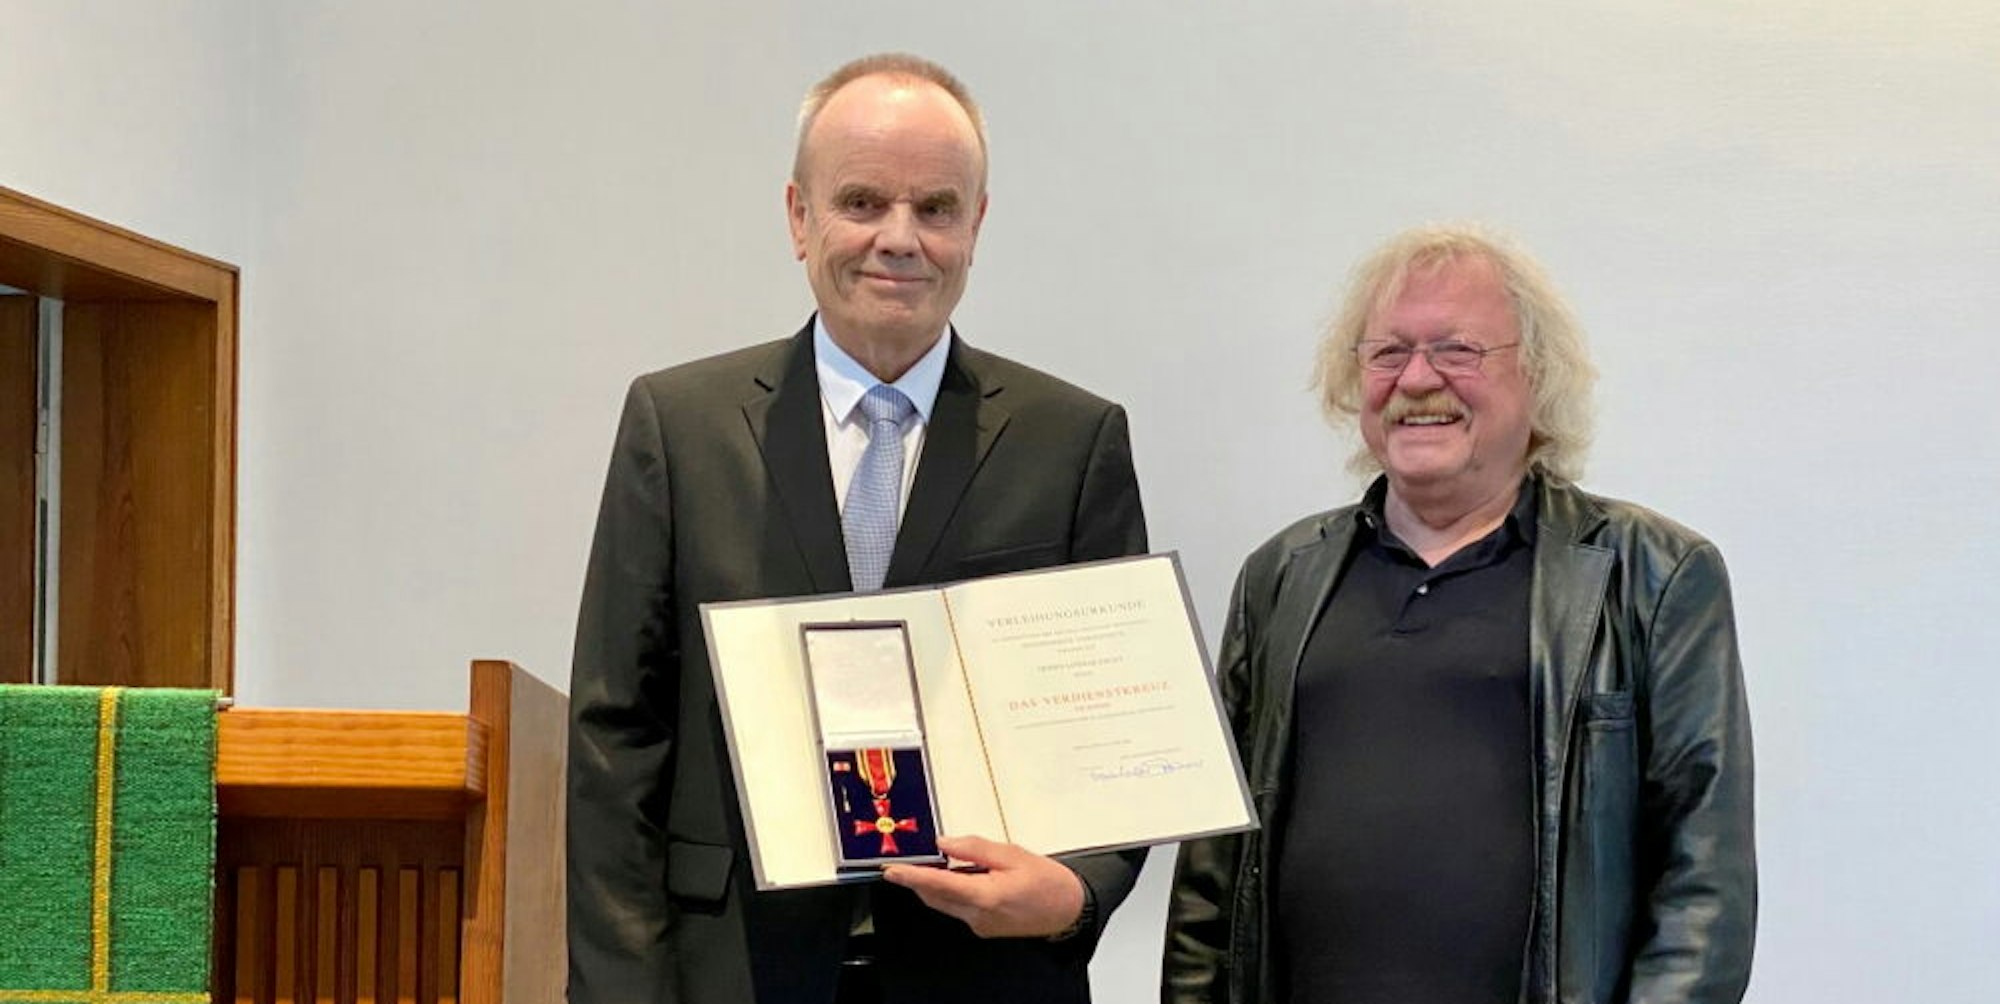 Der Hürther Lothar Ebert (l.) erhielt das Bundesverdienstkreuz am Bande von Vize-Landrat Horst Lambertz.